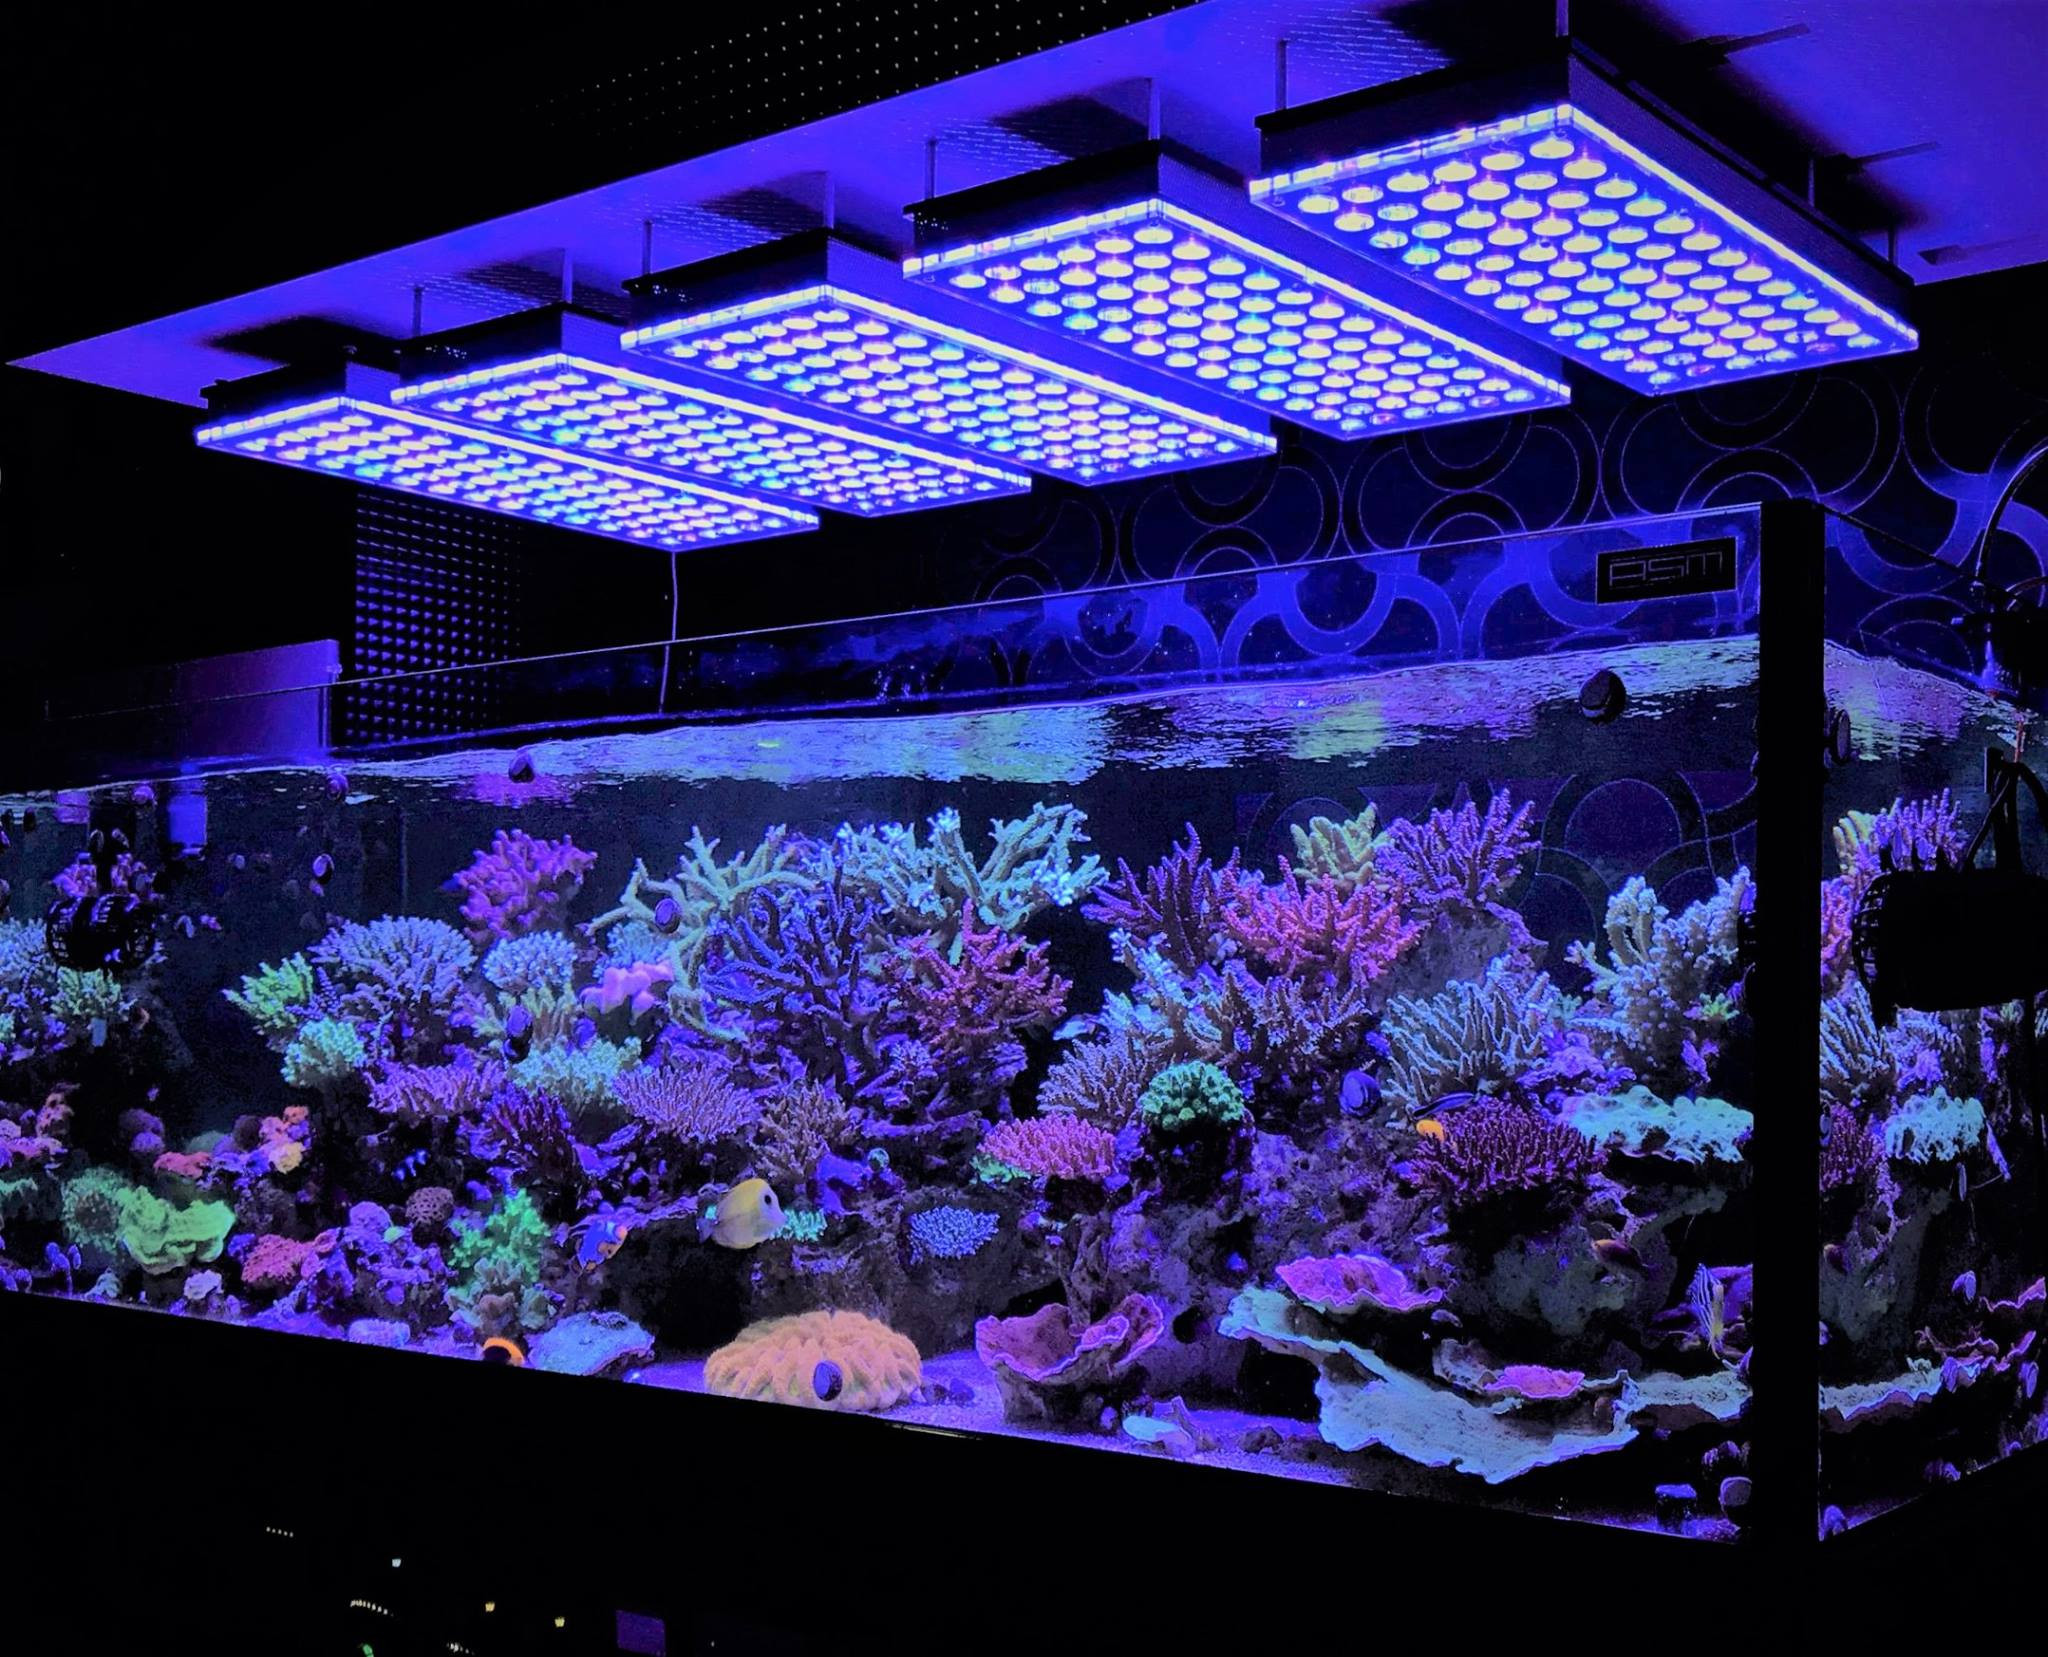 Best ideas about Led Aquarium Lights
. Save or Pin Aquarium LED Lighting s best Reef Aquarium LED Now.